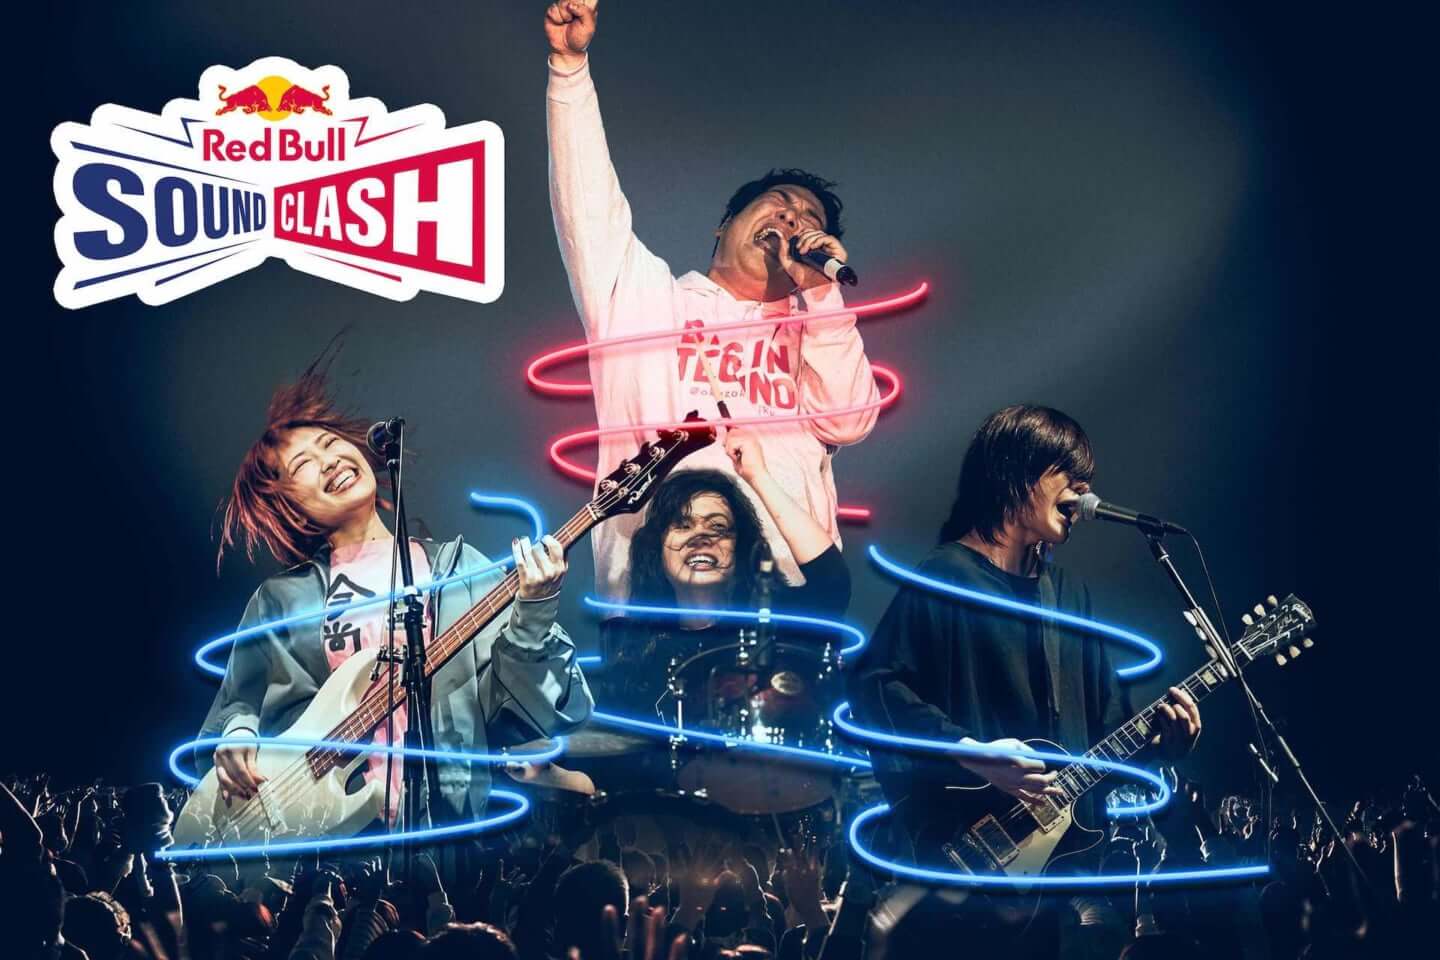 Red Bull SoundClash